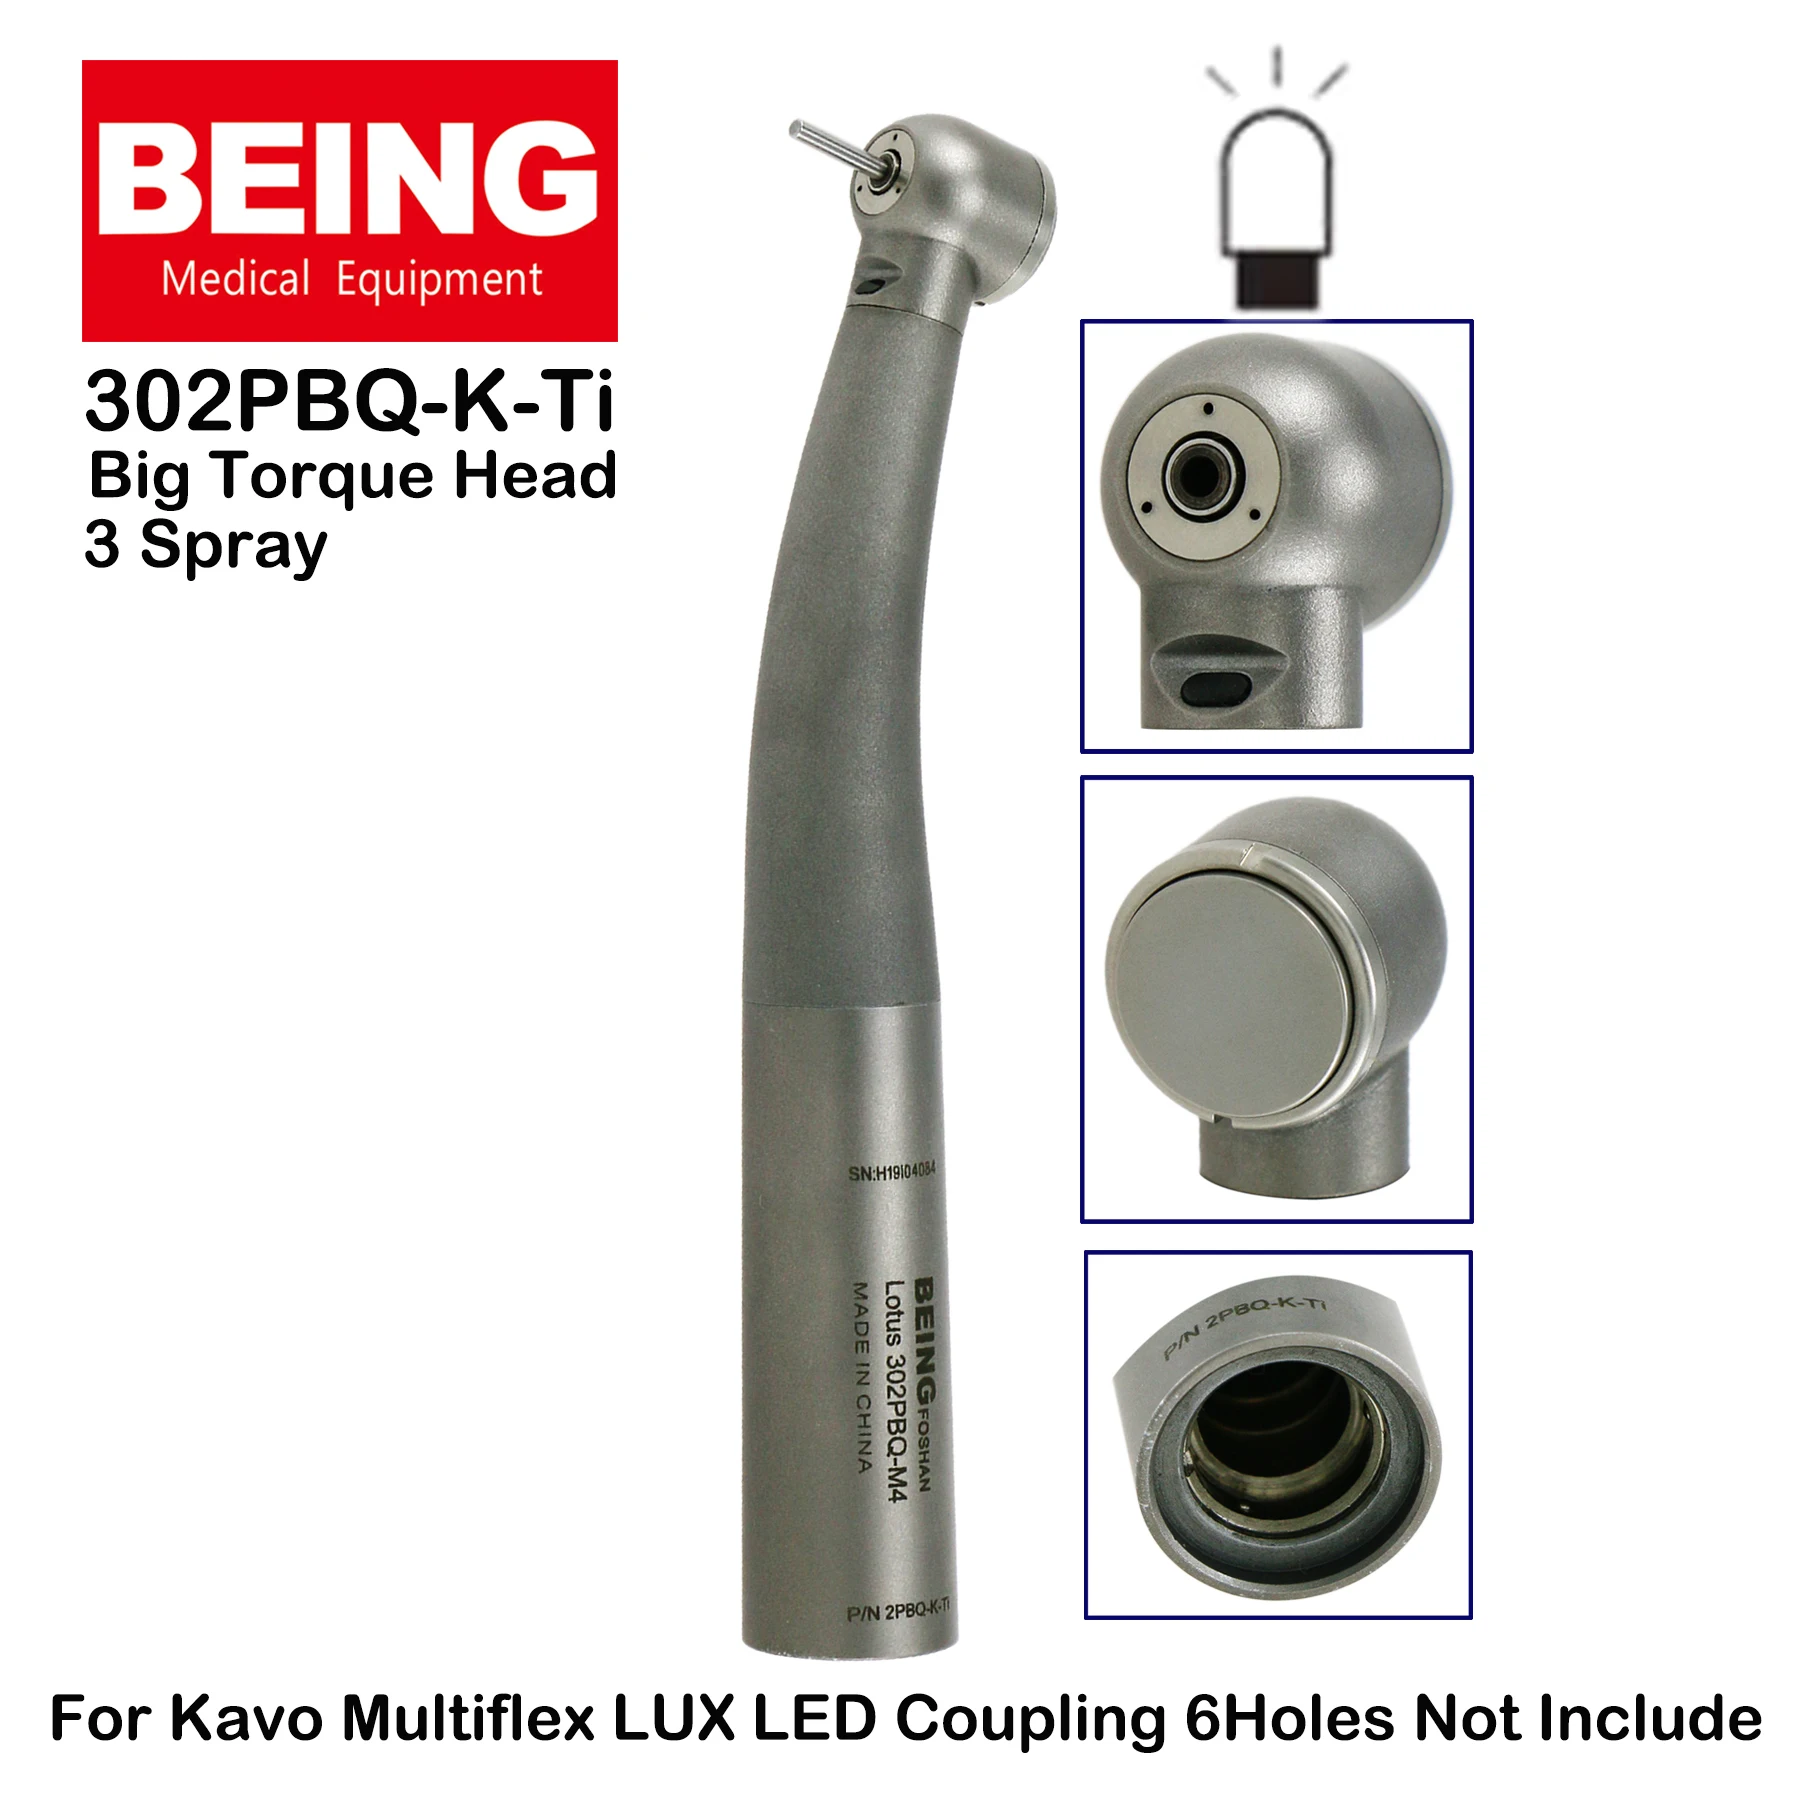 BEING Dental LED Fiber Optic High Speed Big Torque Head Air Turbine Handpiece 302PBQ-K Ti Fit KAVO MULTIflex Coupling 6Holes